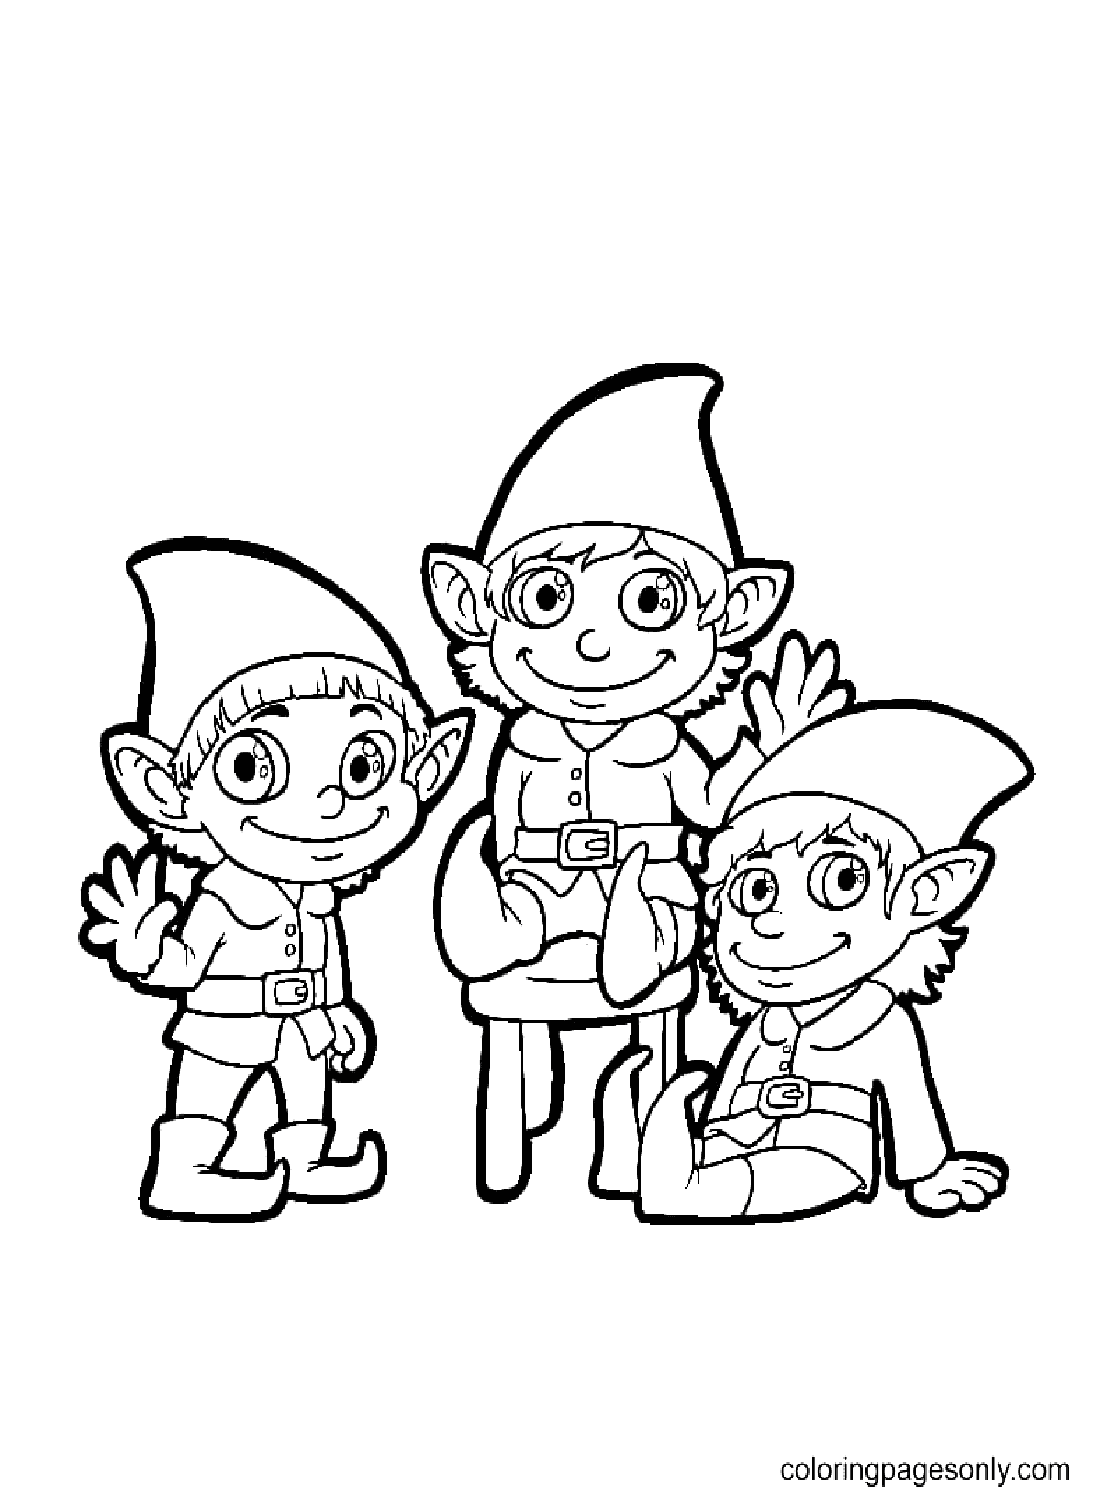 Três Elfos de Natal from Elf